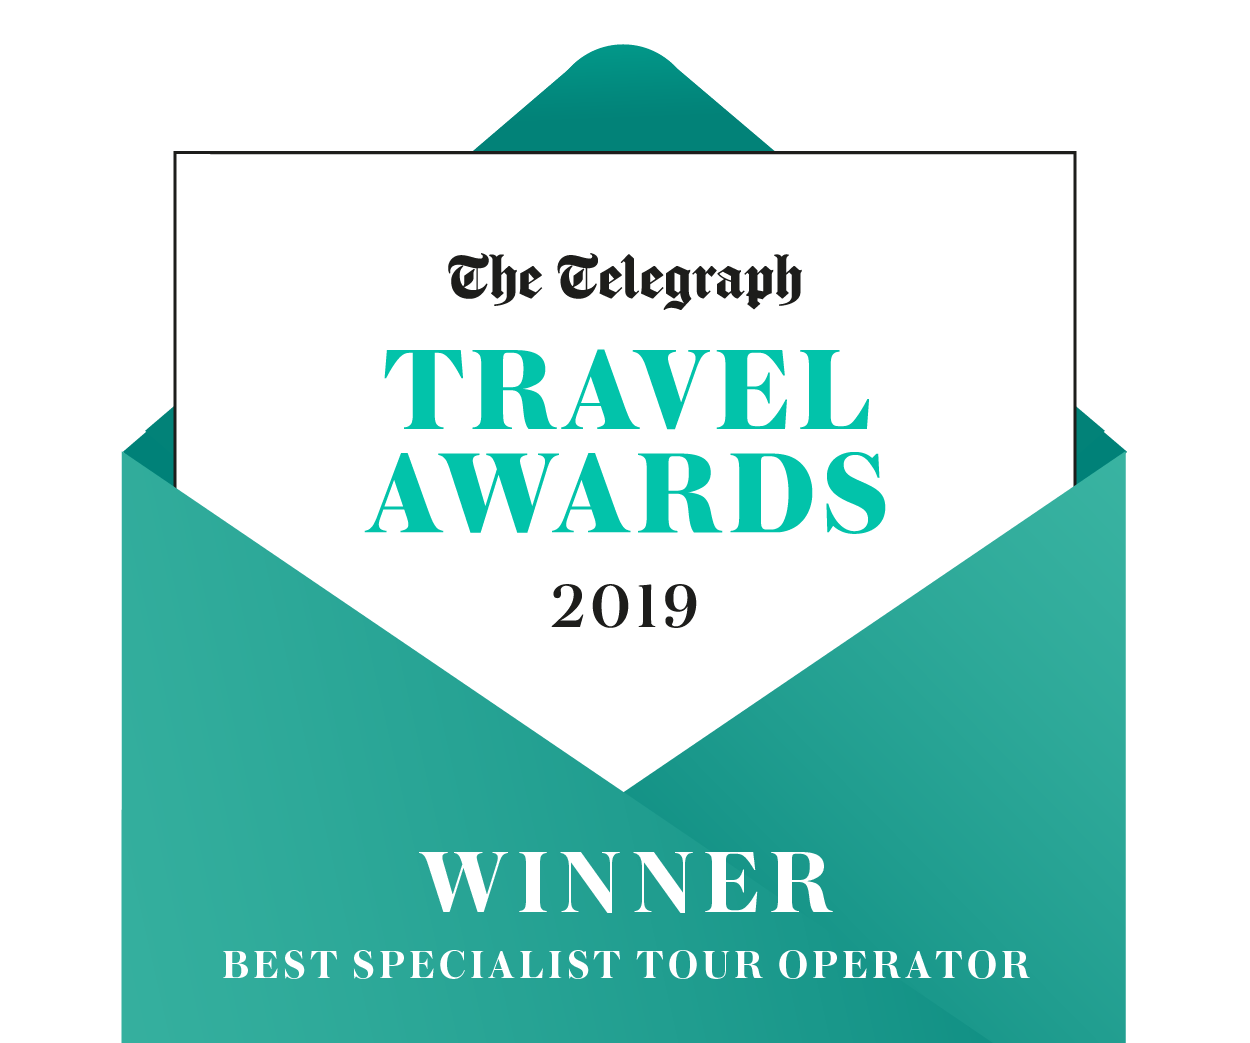 telegraph travel awards